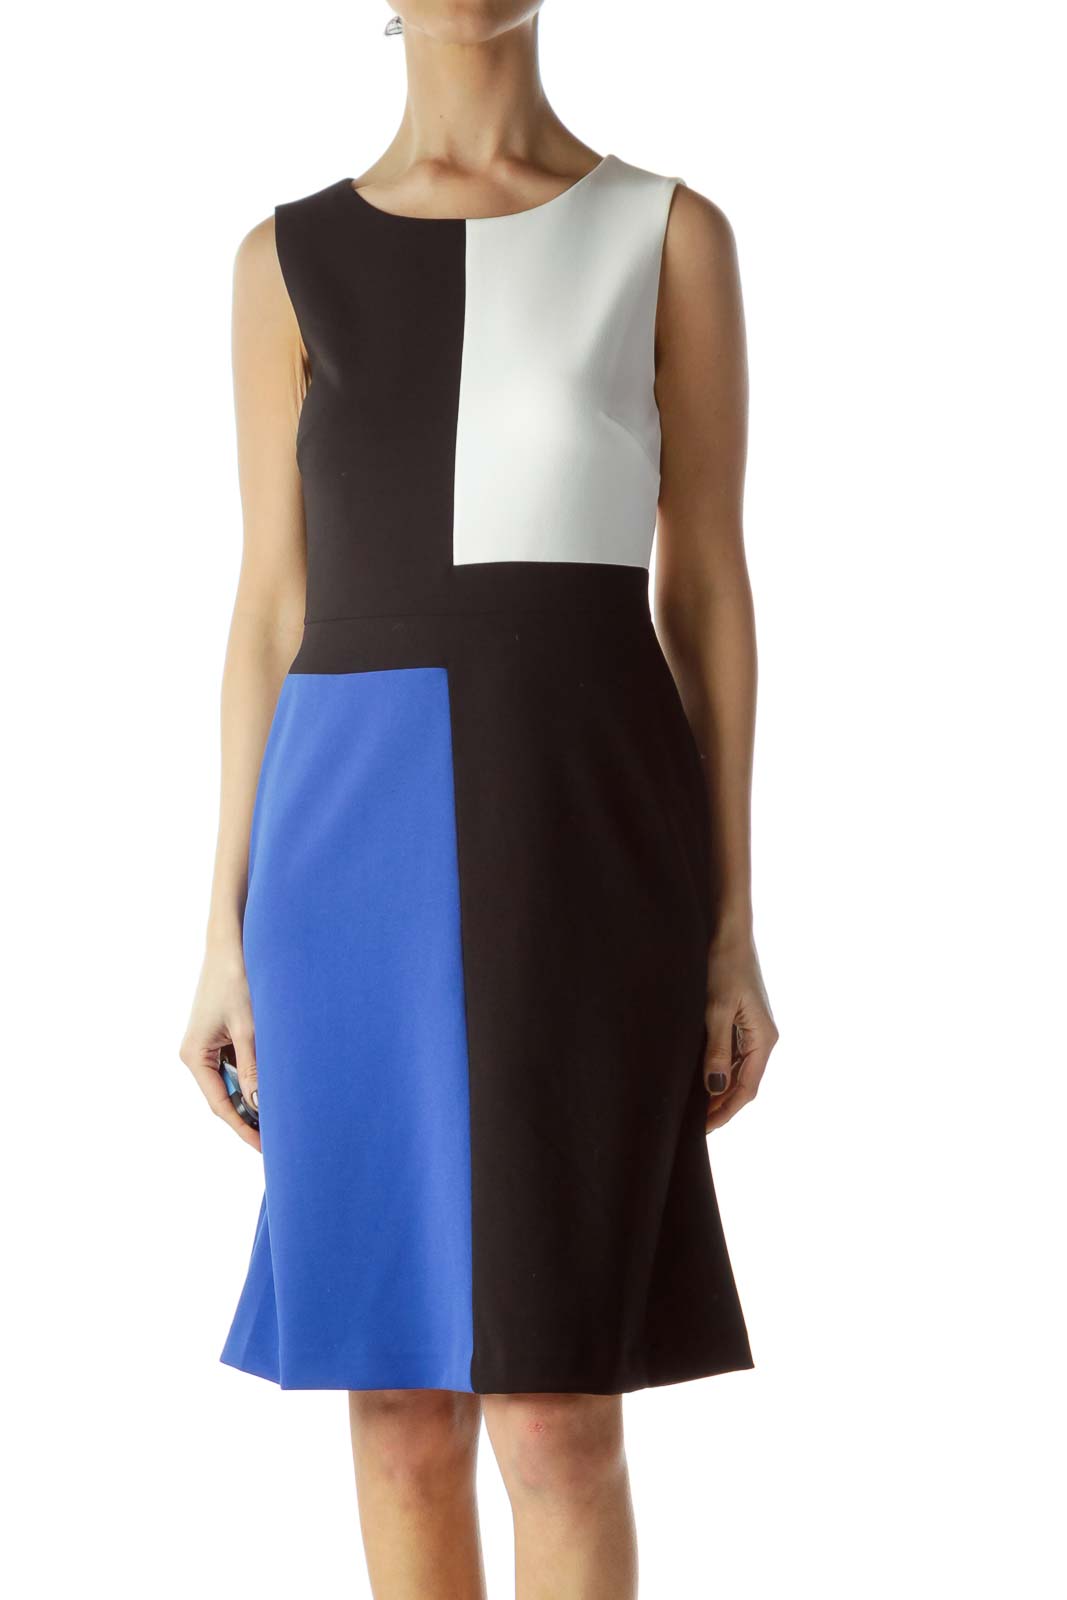 Black and Blue Color Block Dress Front